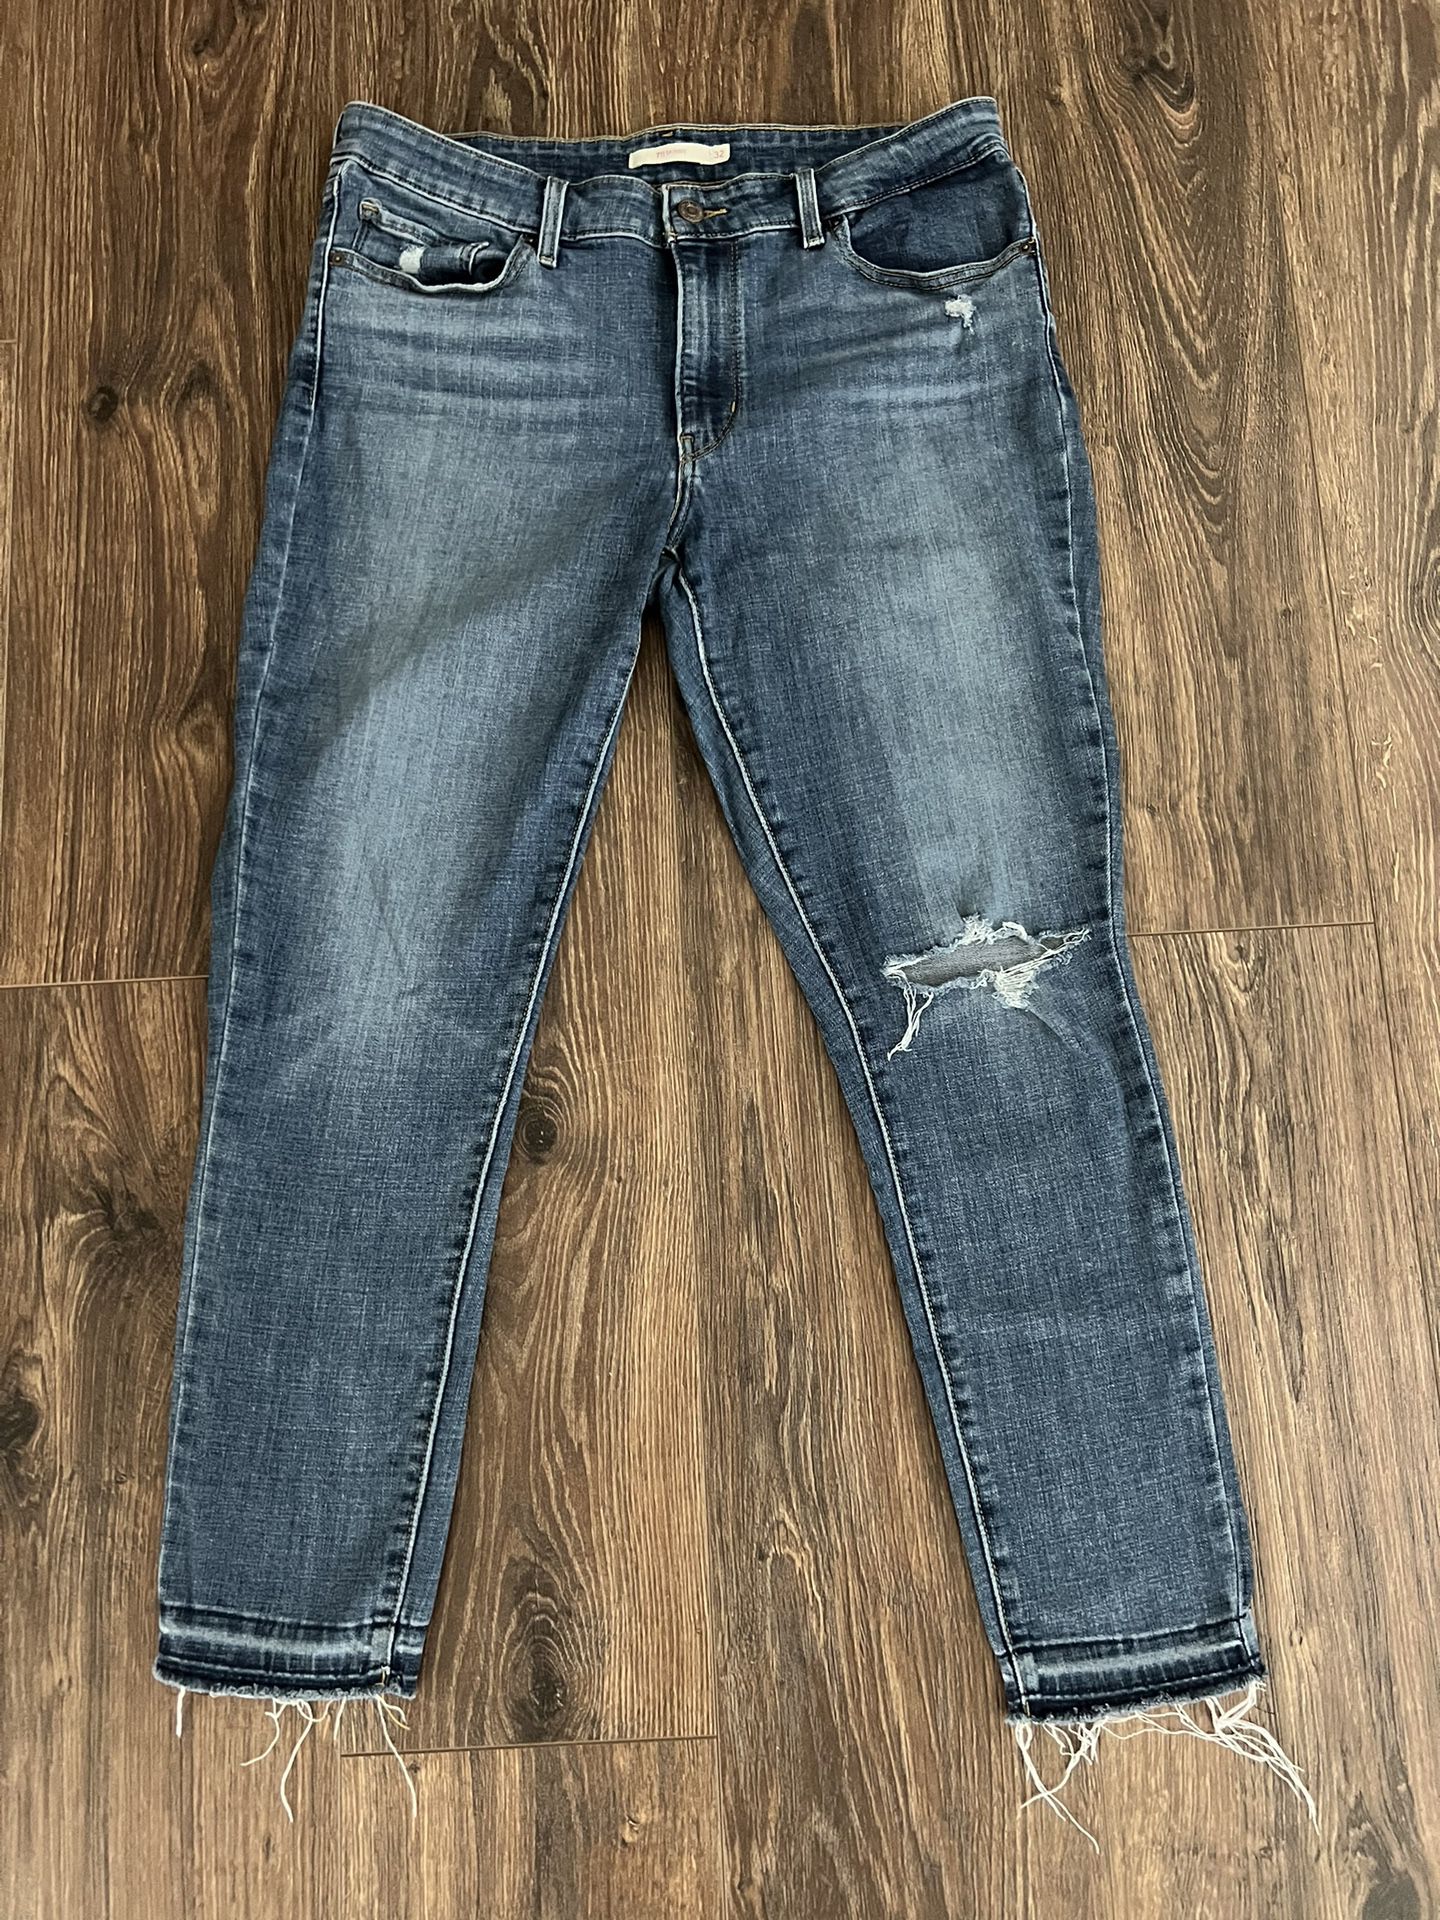 Womens Levi Jeans - 711 Skinny - Size 32